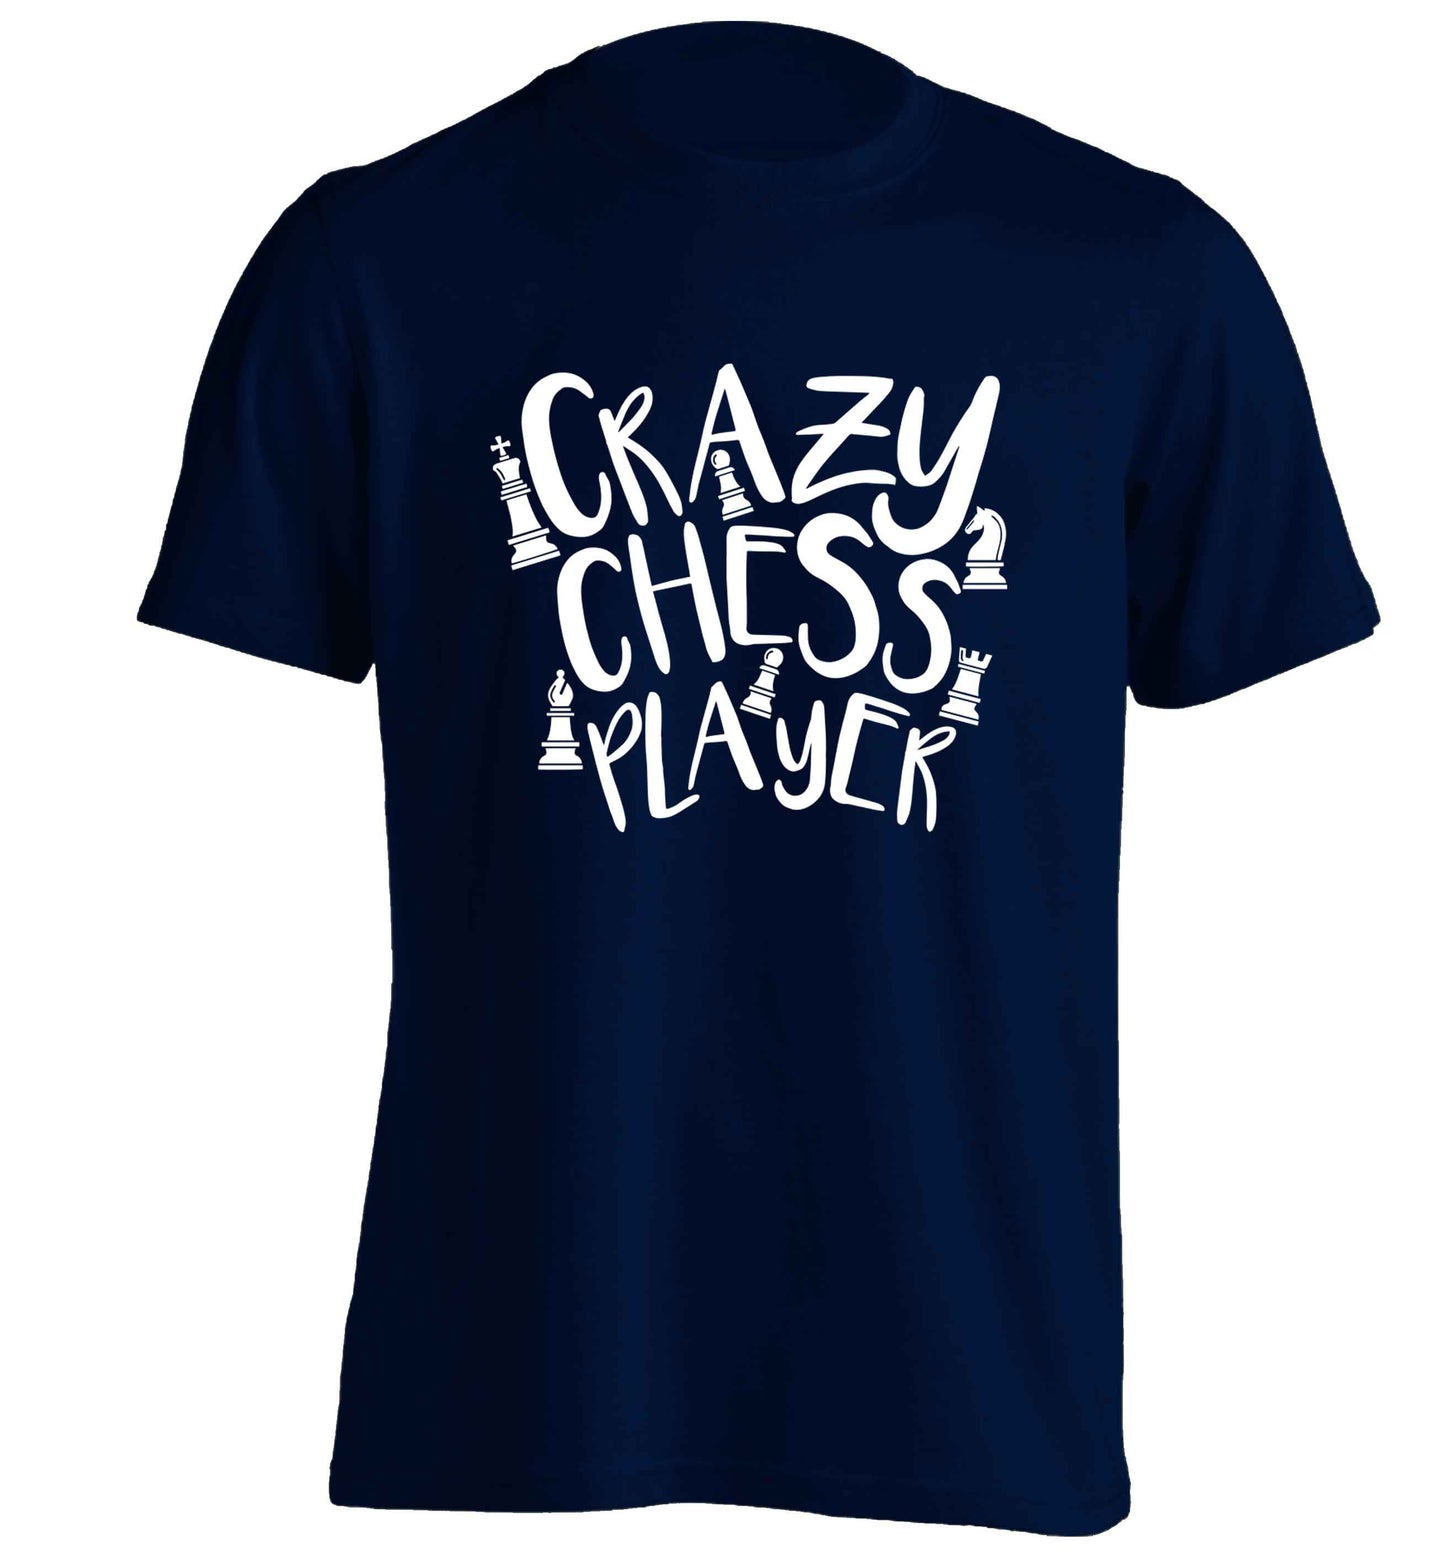 Crazy chess player adults unisex navy Tshirt 2XL